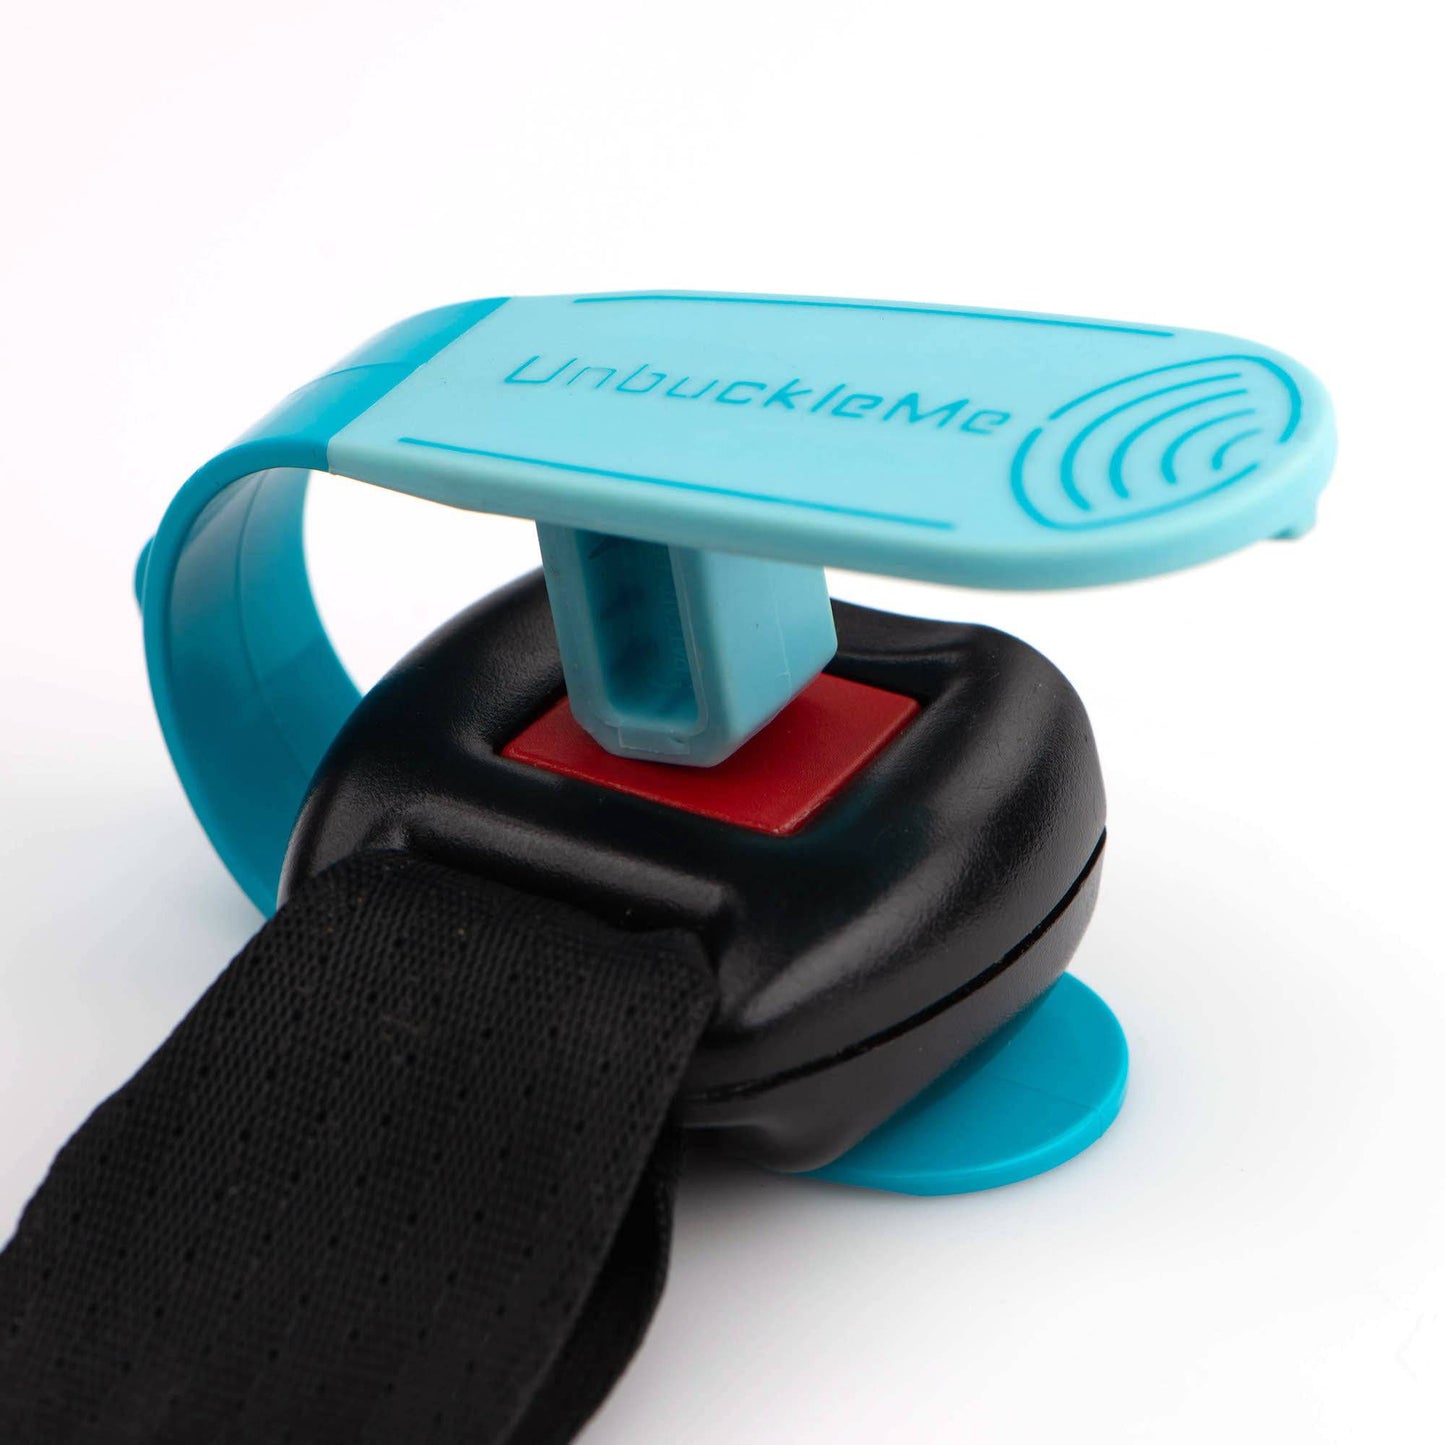 UnbuckleMe Car Seat Buckle Release Tool - Blue